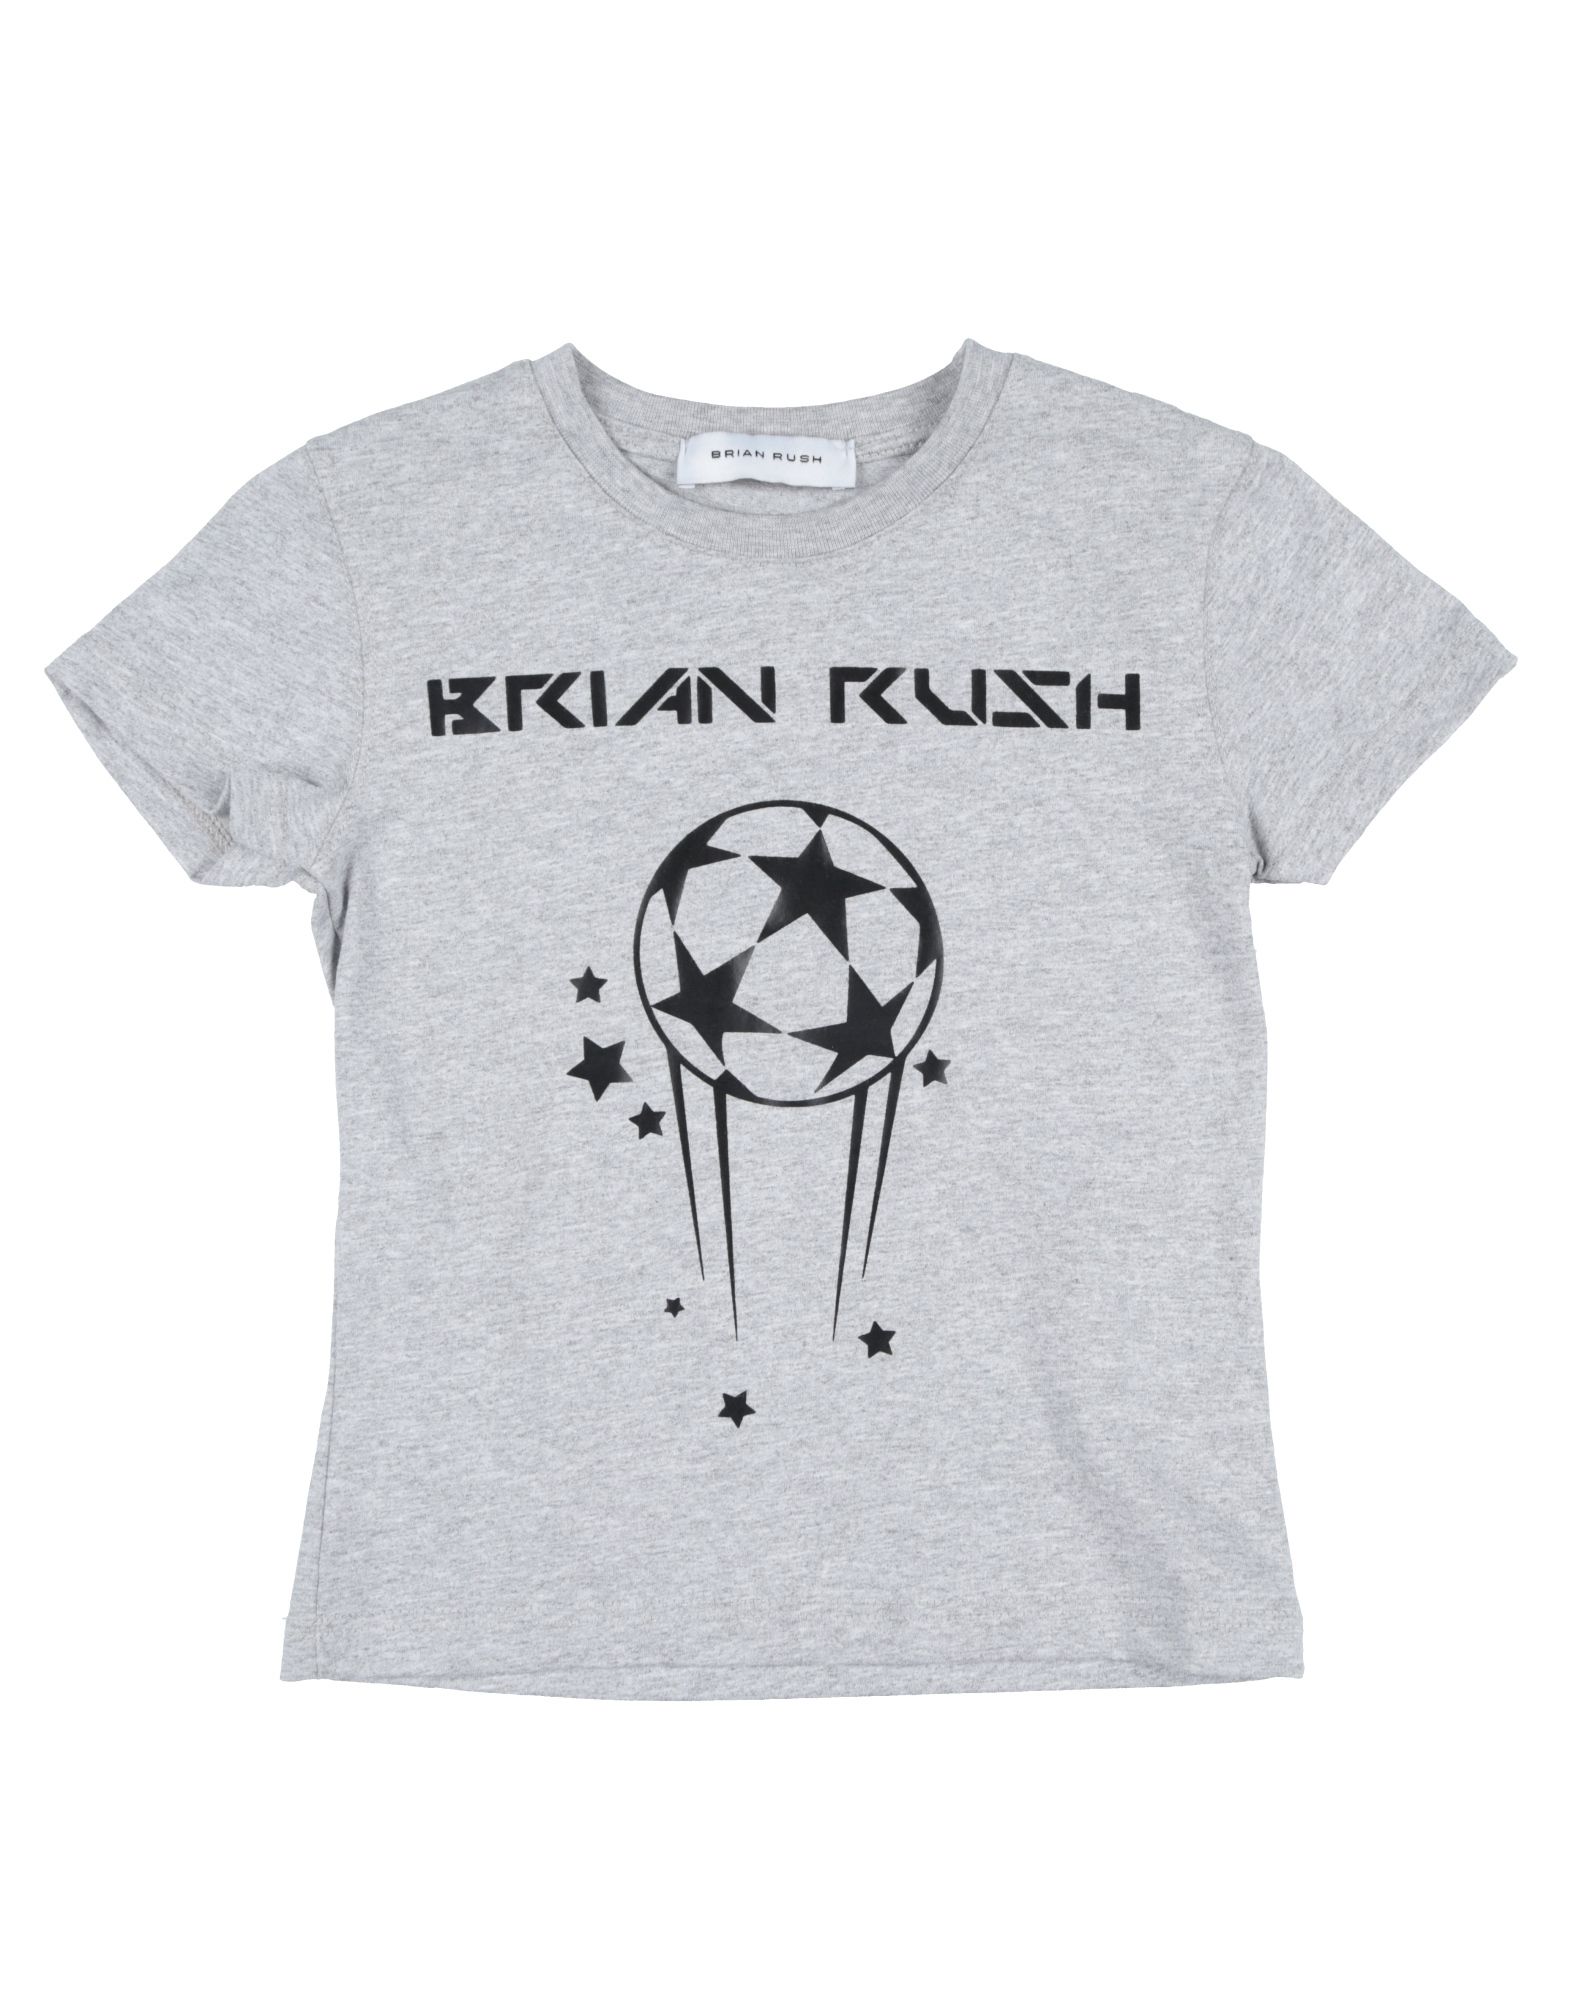 Brian Rush Kids' T-shirts In Grey